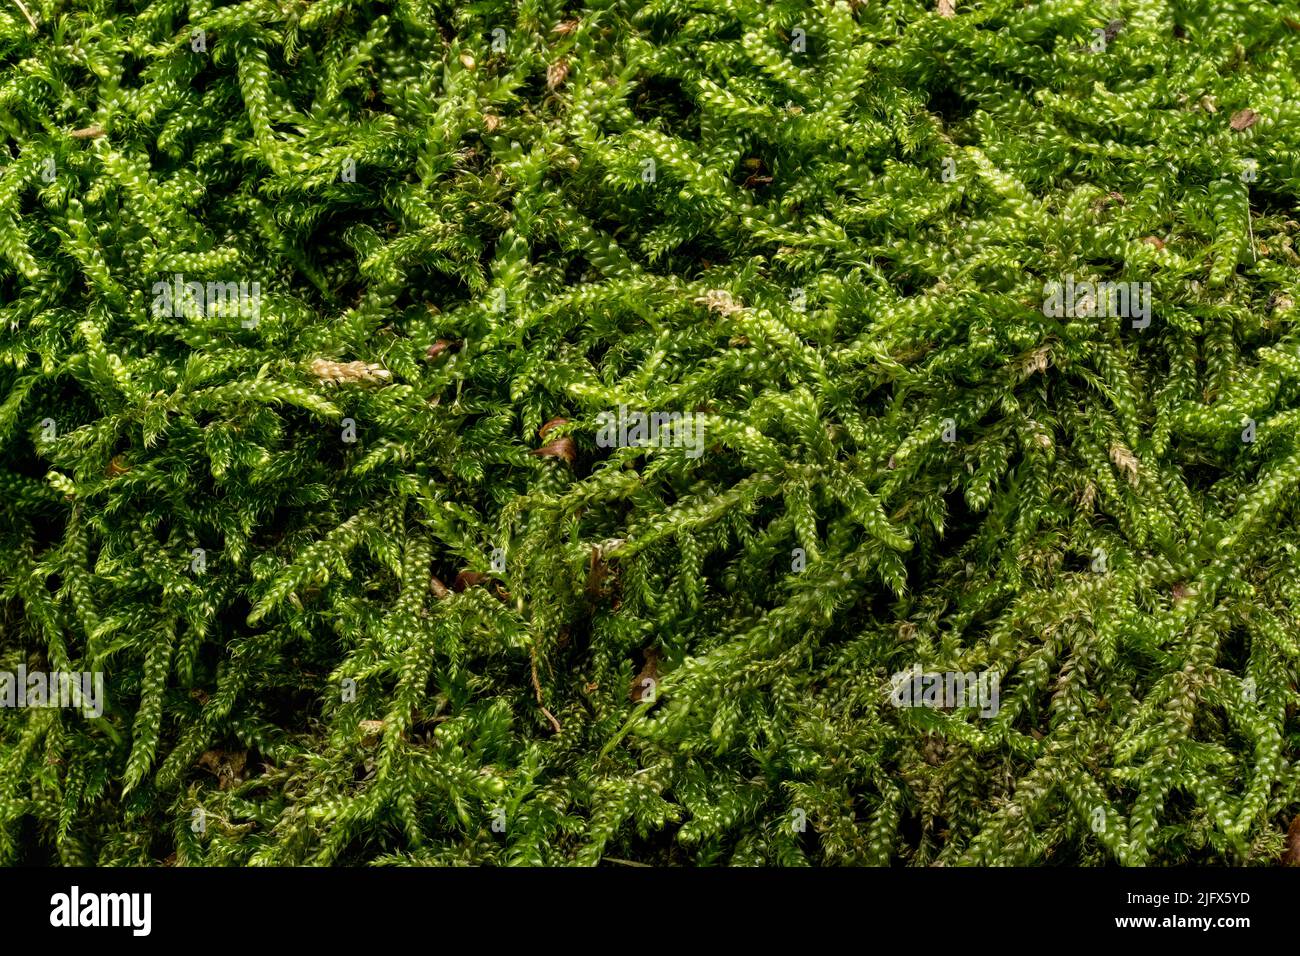 Fine green moss, Ctenidium species, growing in forest on tree, closeup macro detail Stock Photo